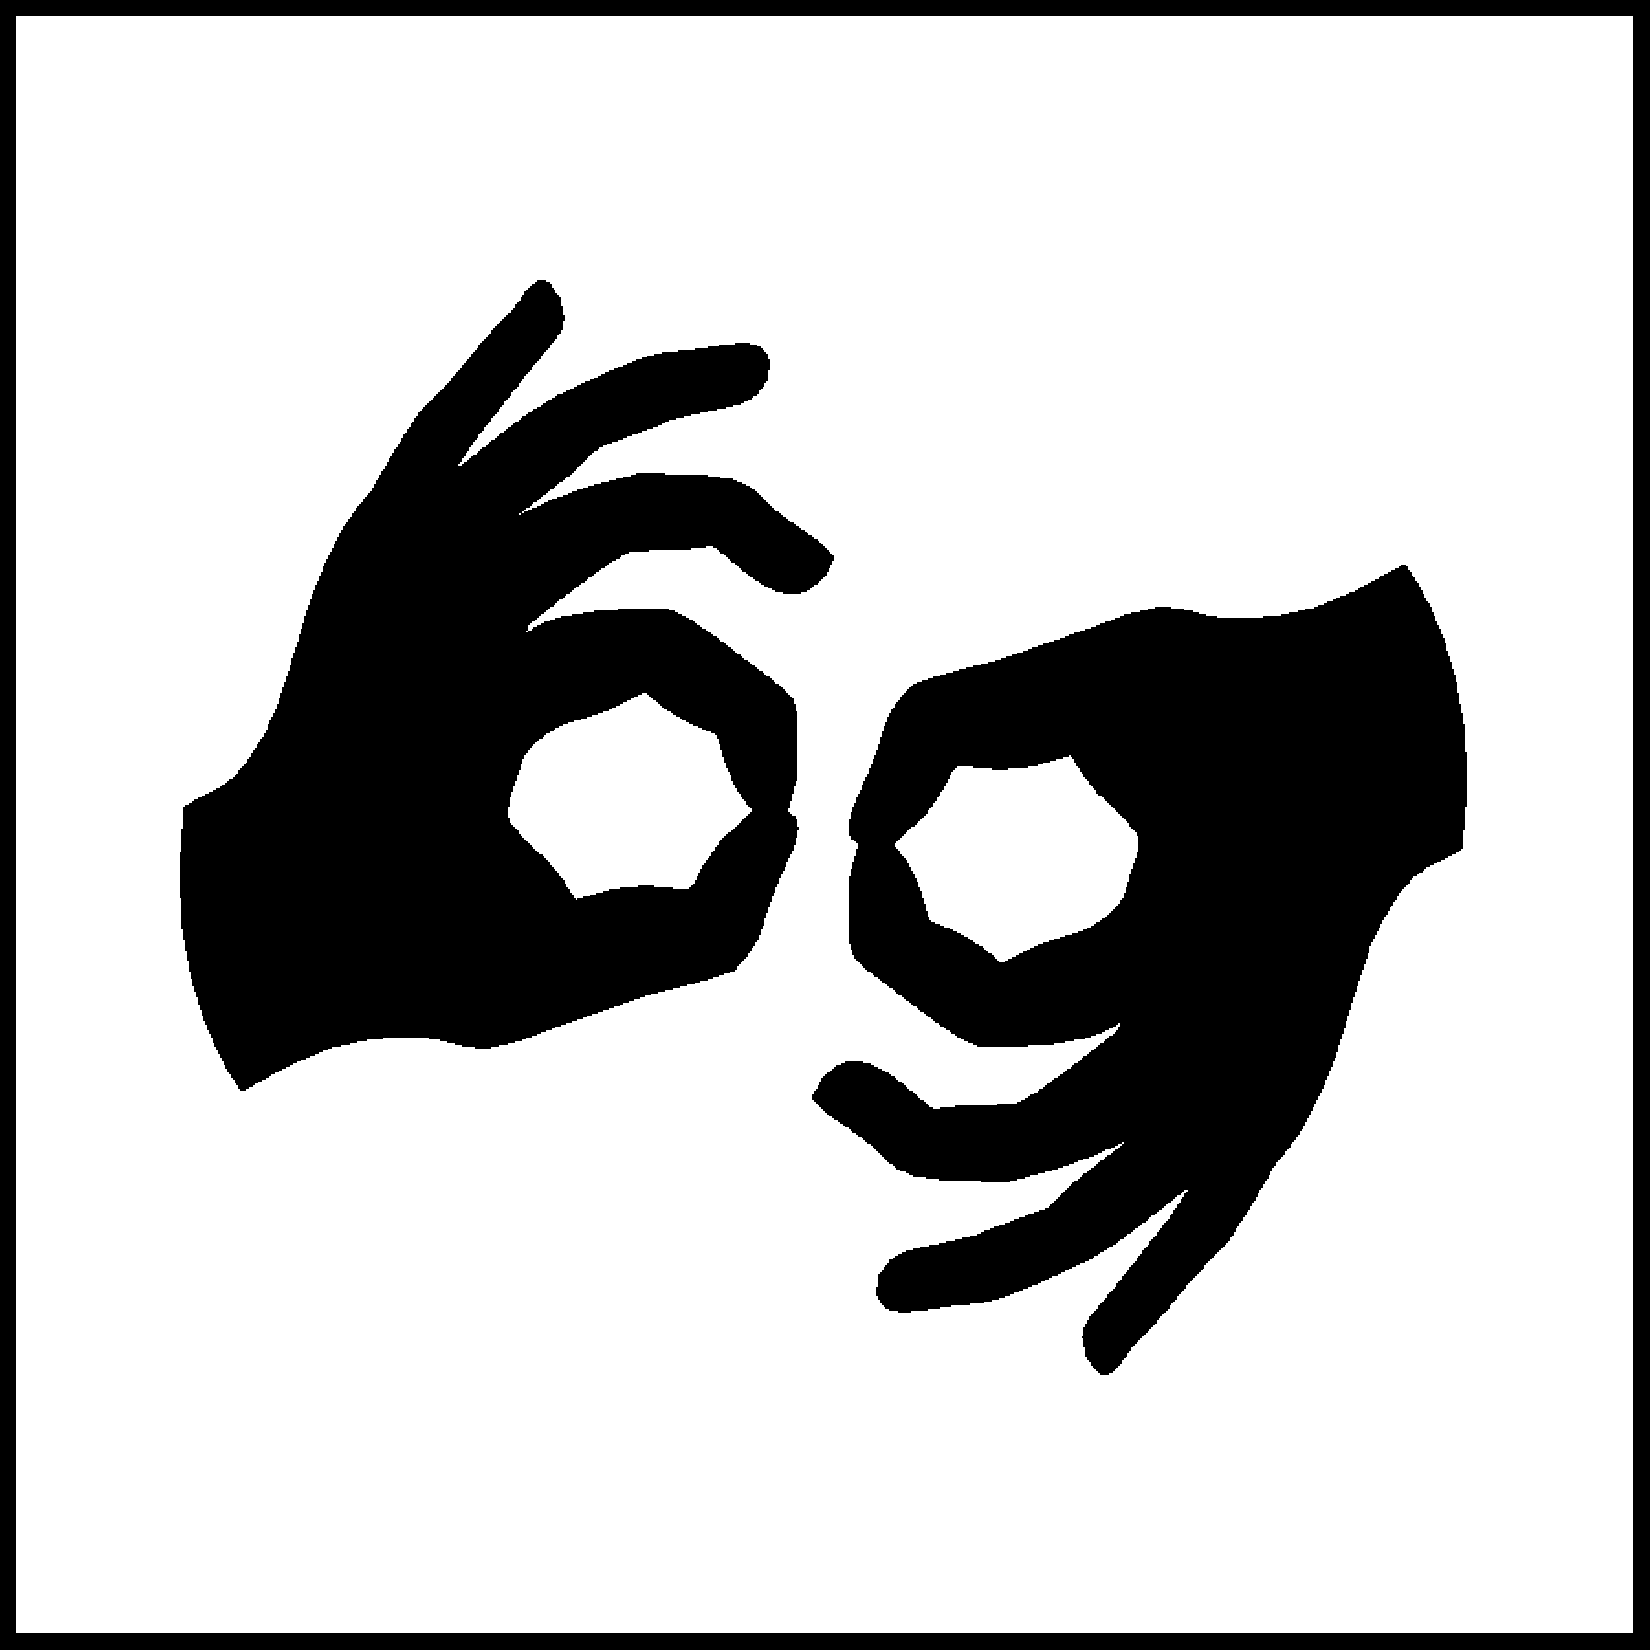 Accessibility Symbol for Sign Language Interpretation